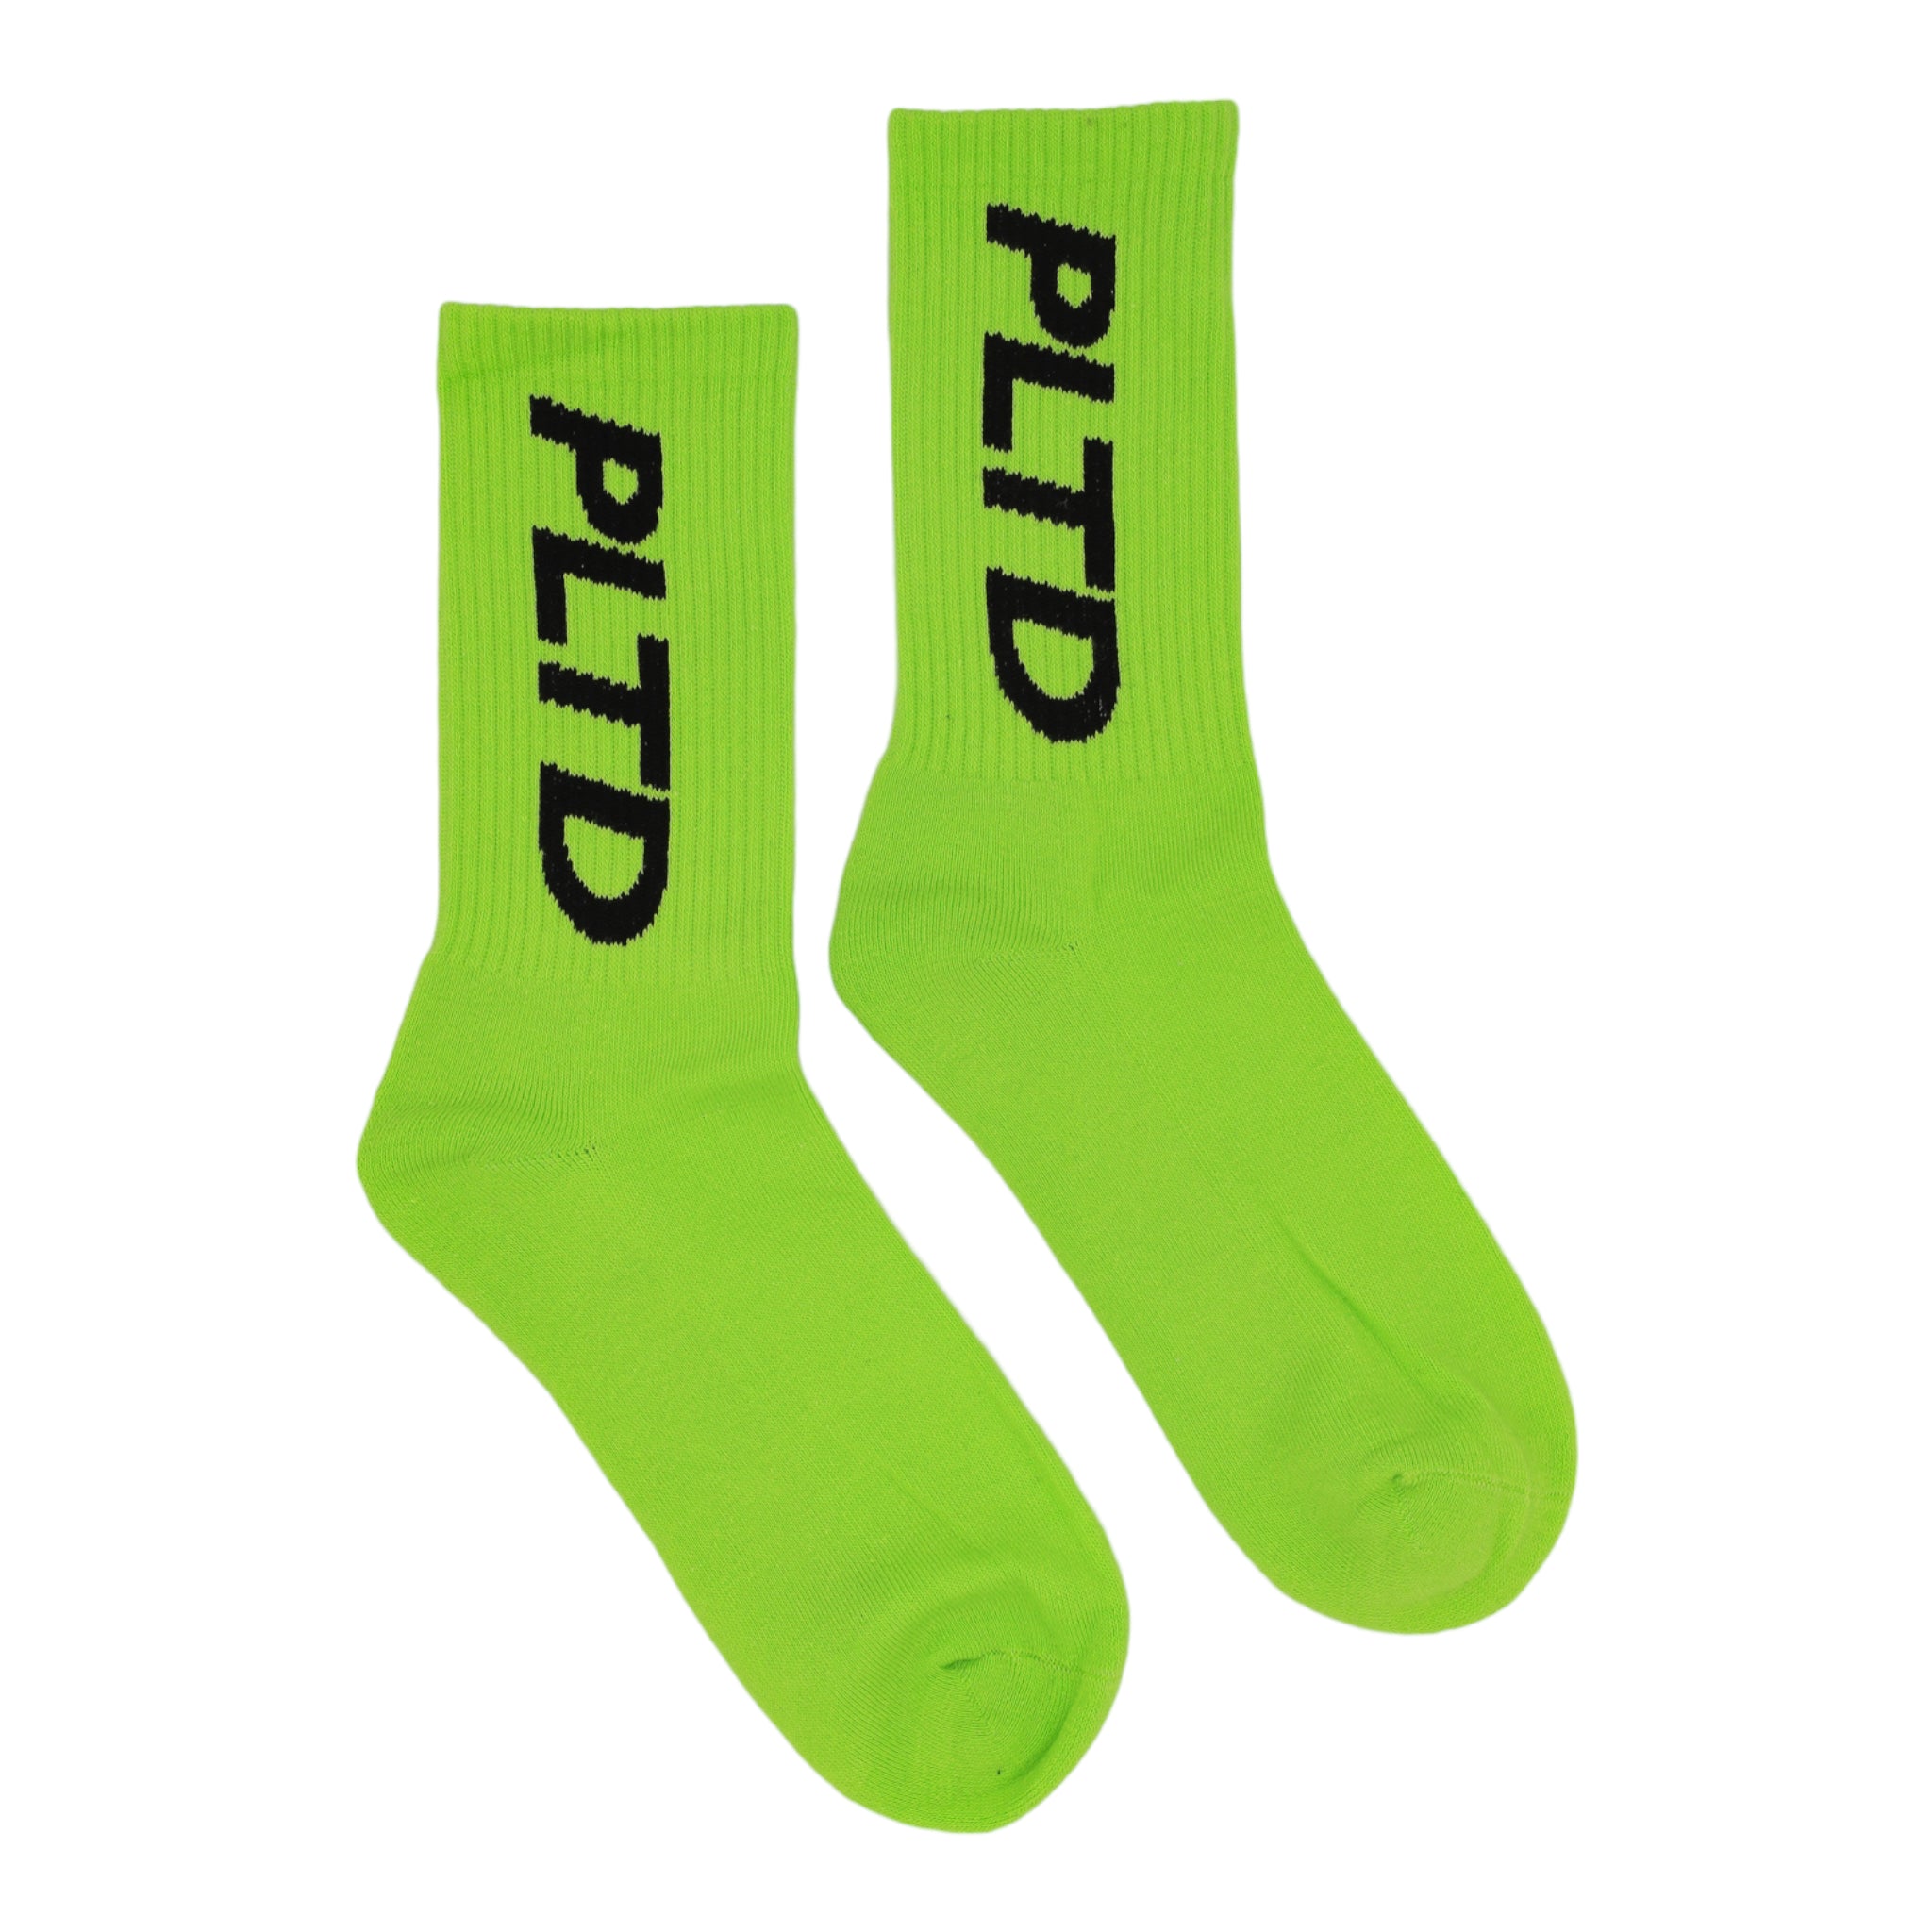 Team PLTD - Lime Terry Cloth Socks